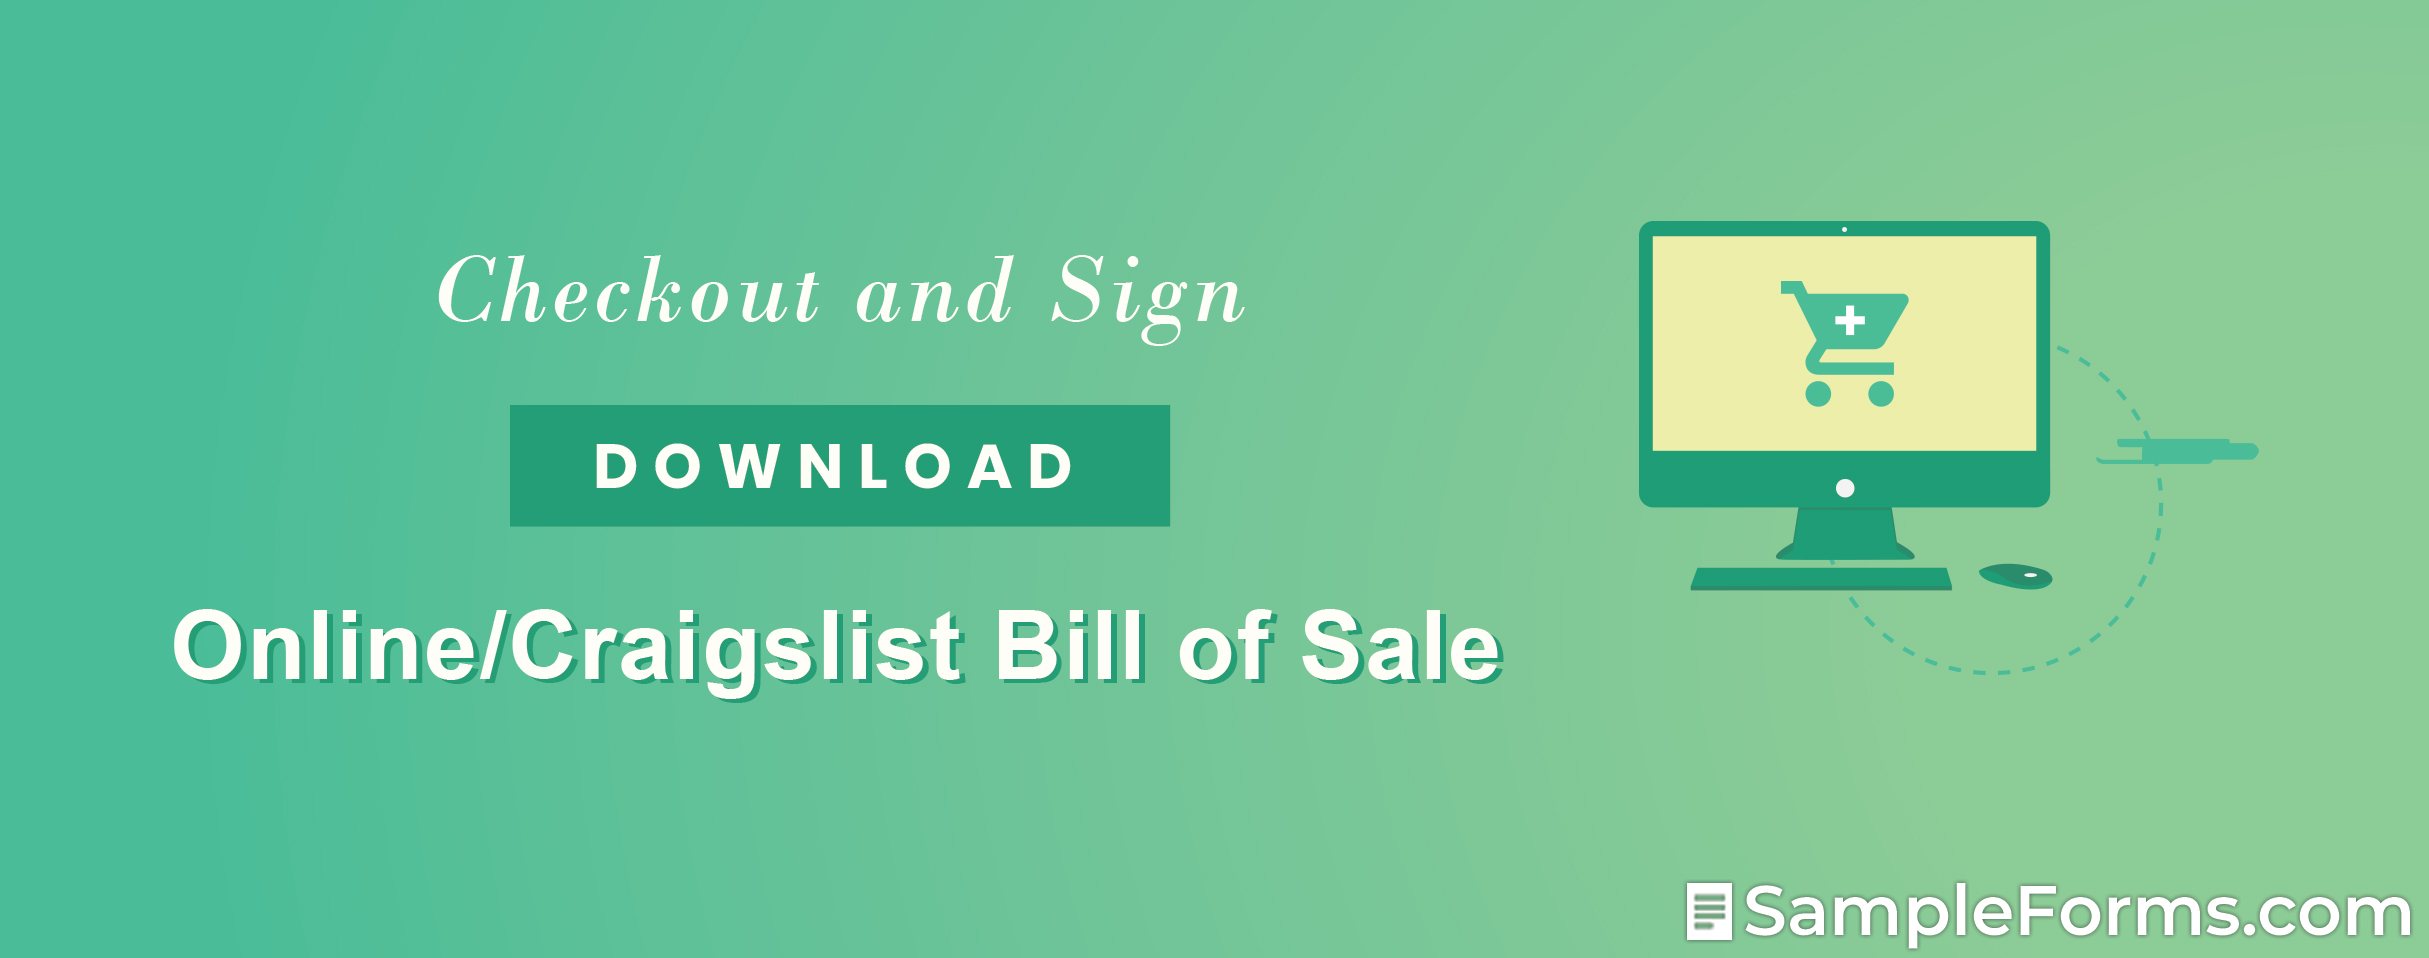 FREE Online/Craigslist Bill of Sale Form [PDF, Word]